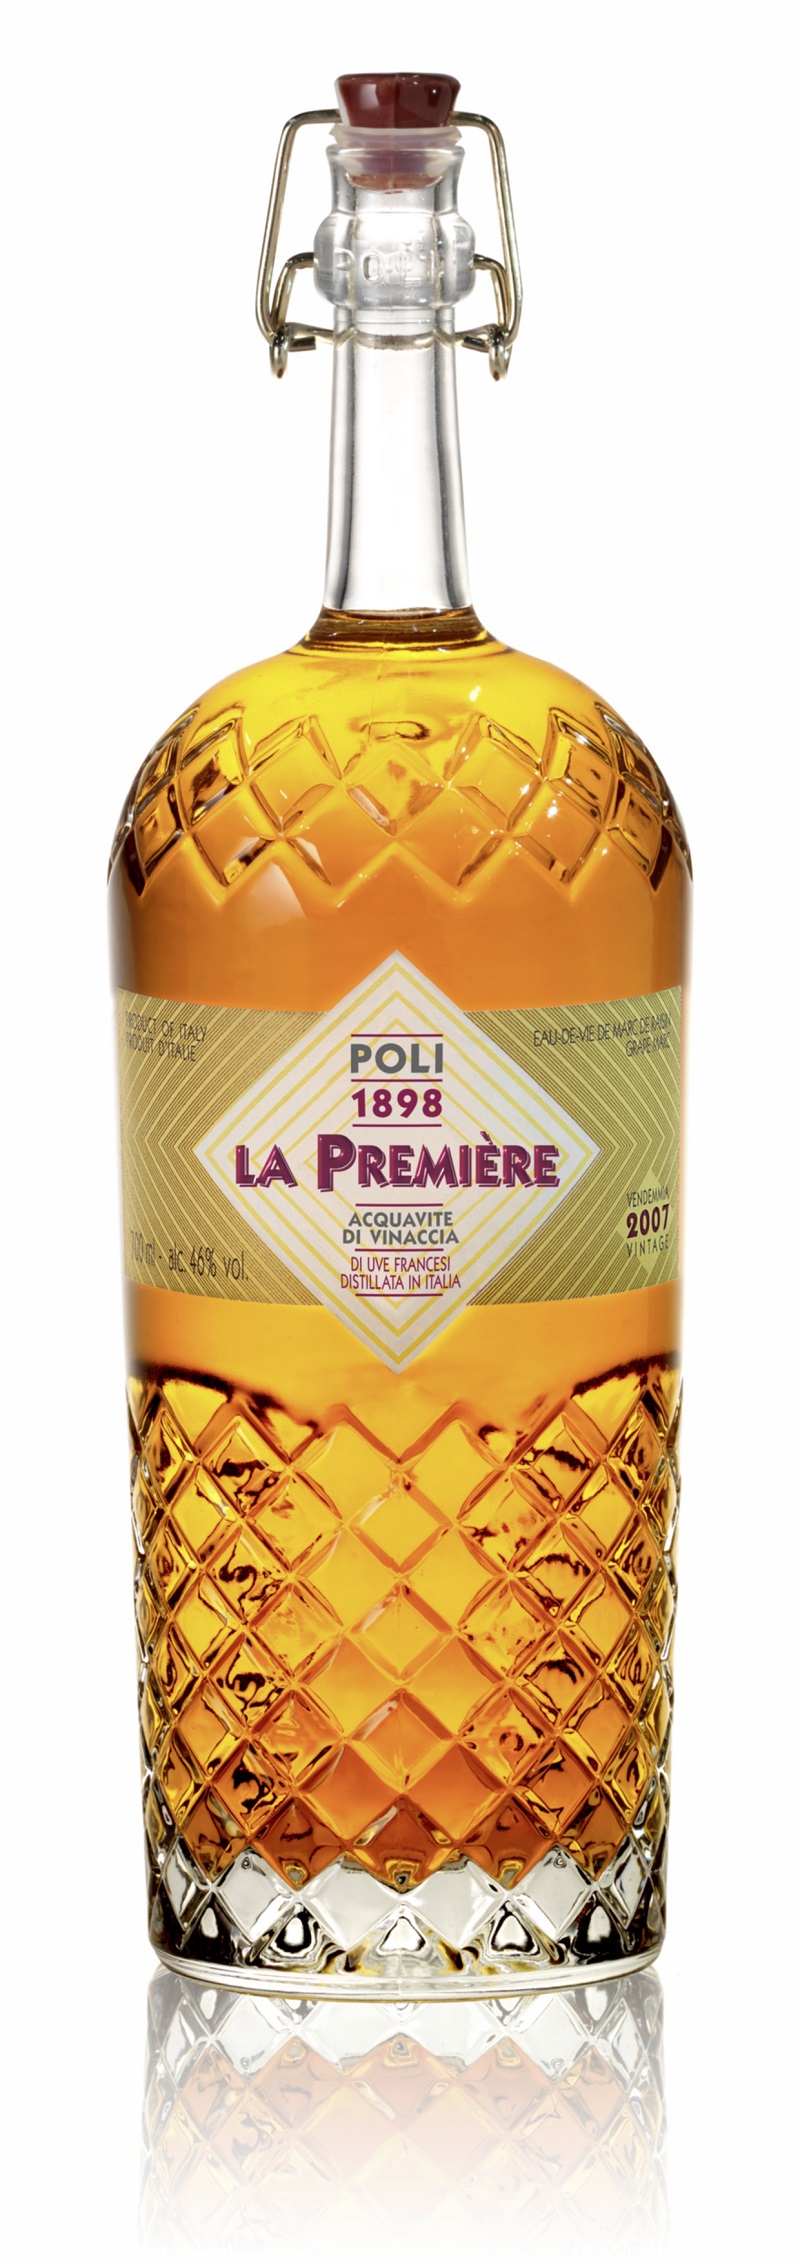 La Première Distillerie Poli